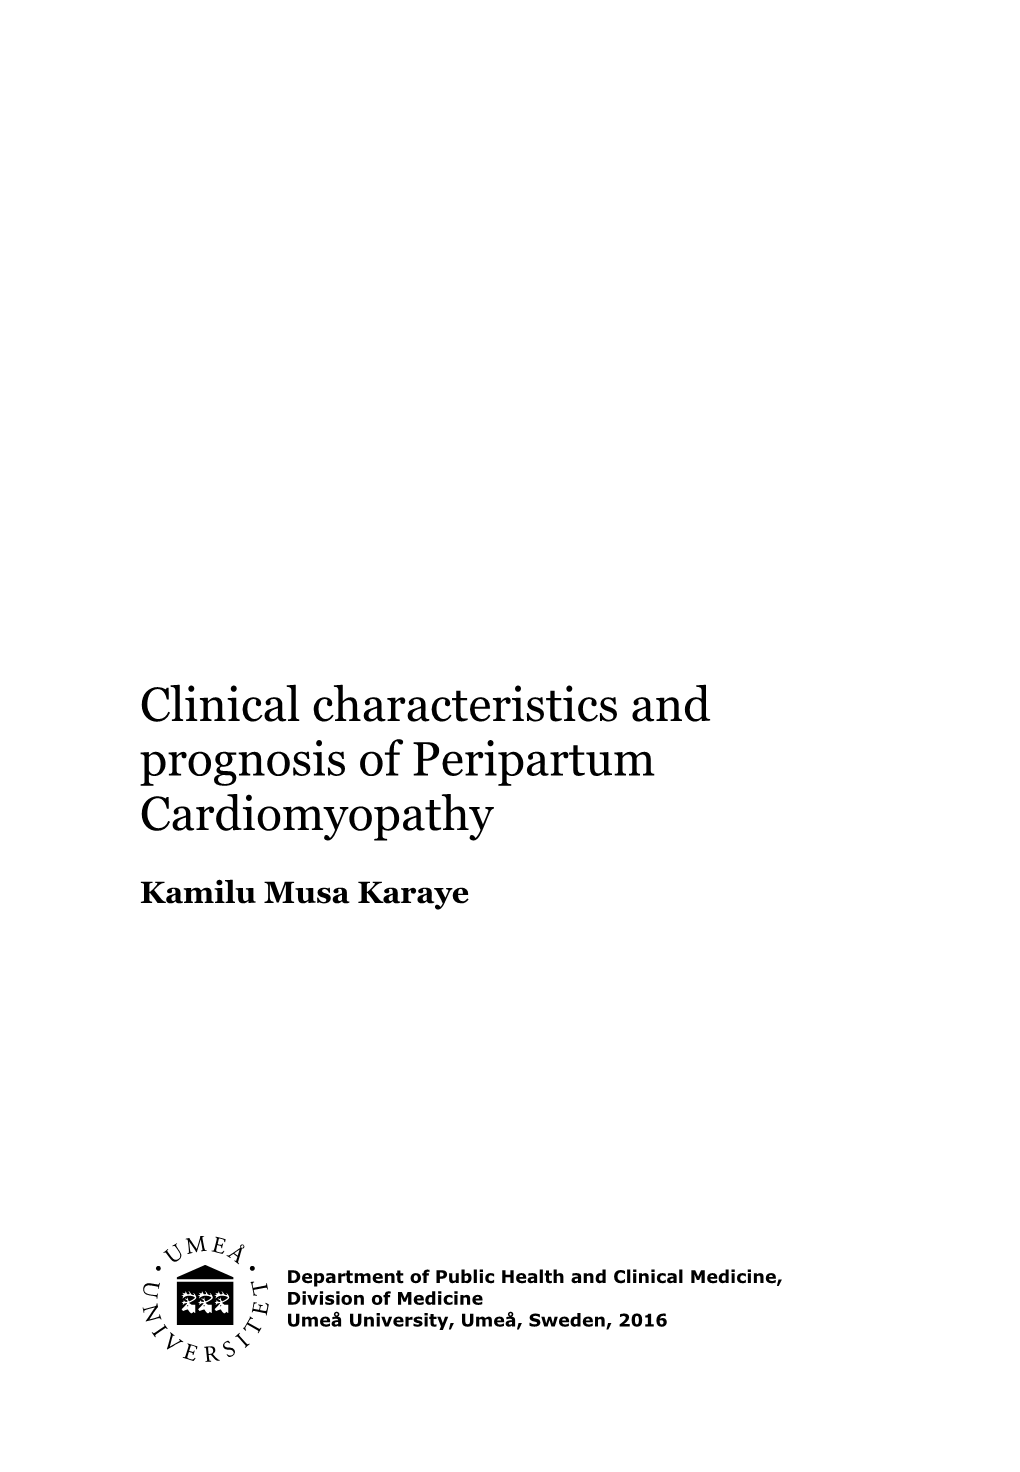 Clinical Characteristics and Prognosis of Peripartum Cardiomyopathy